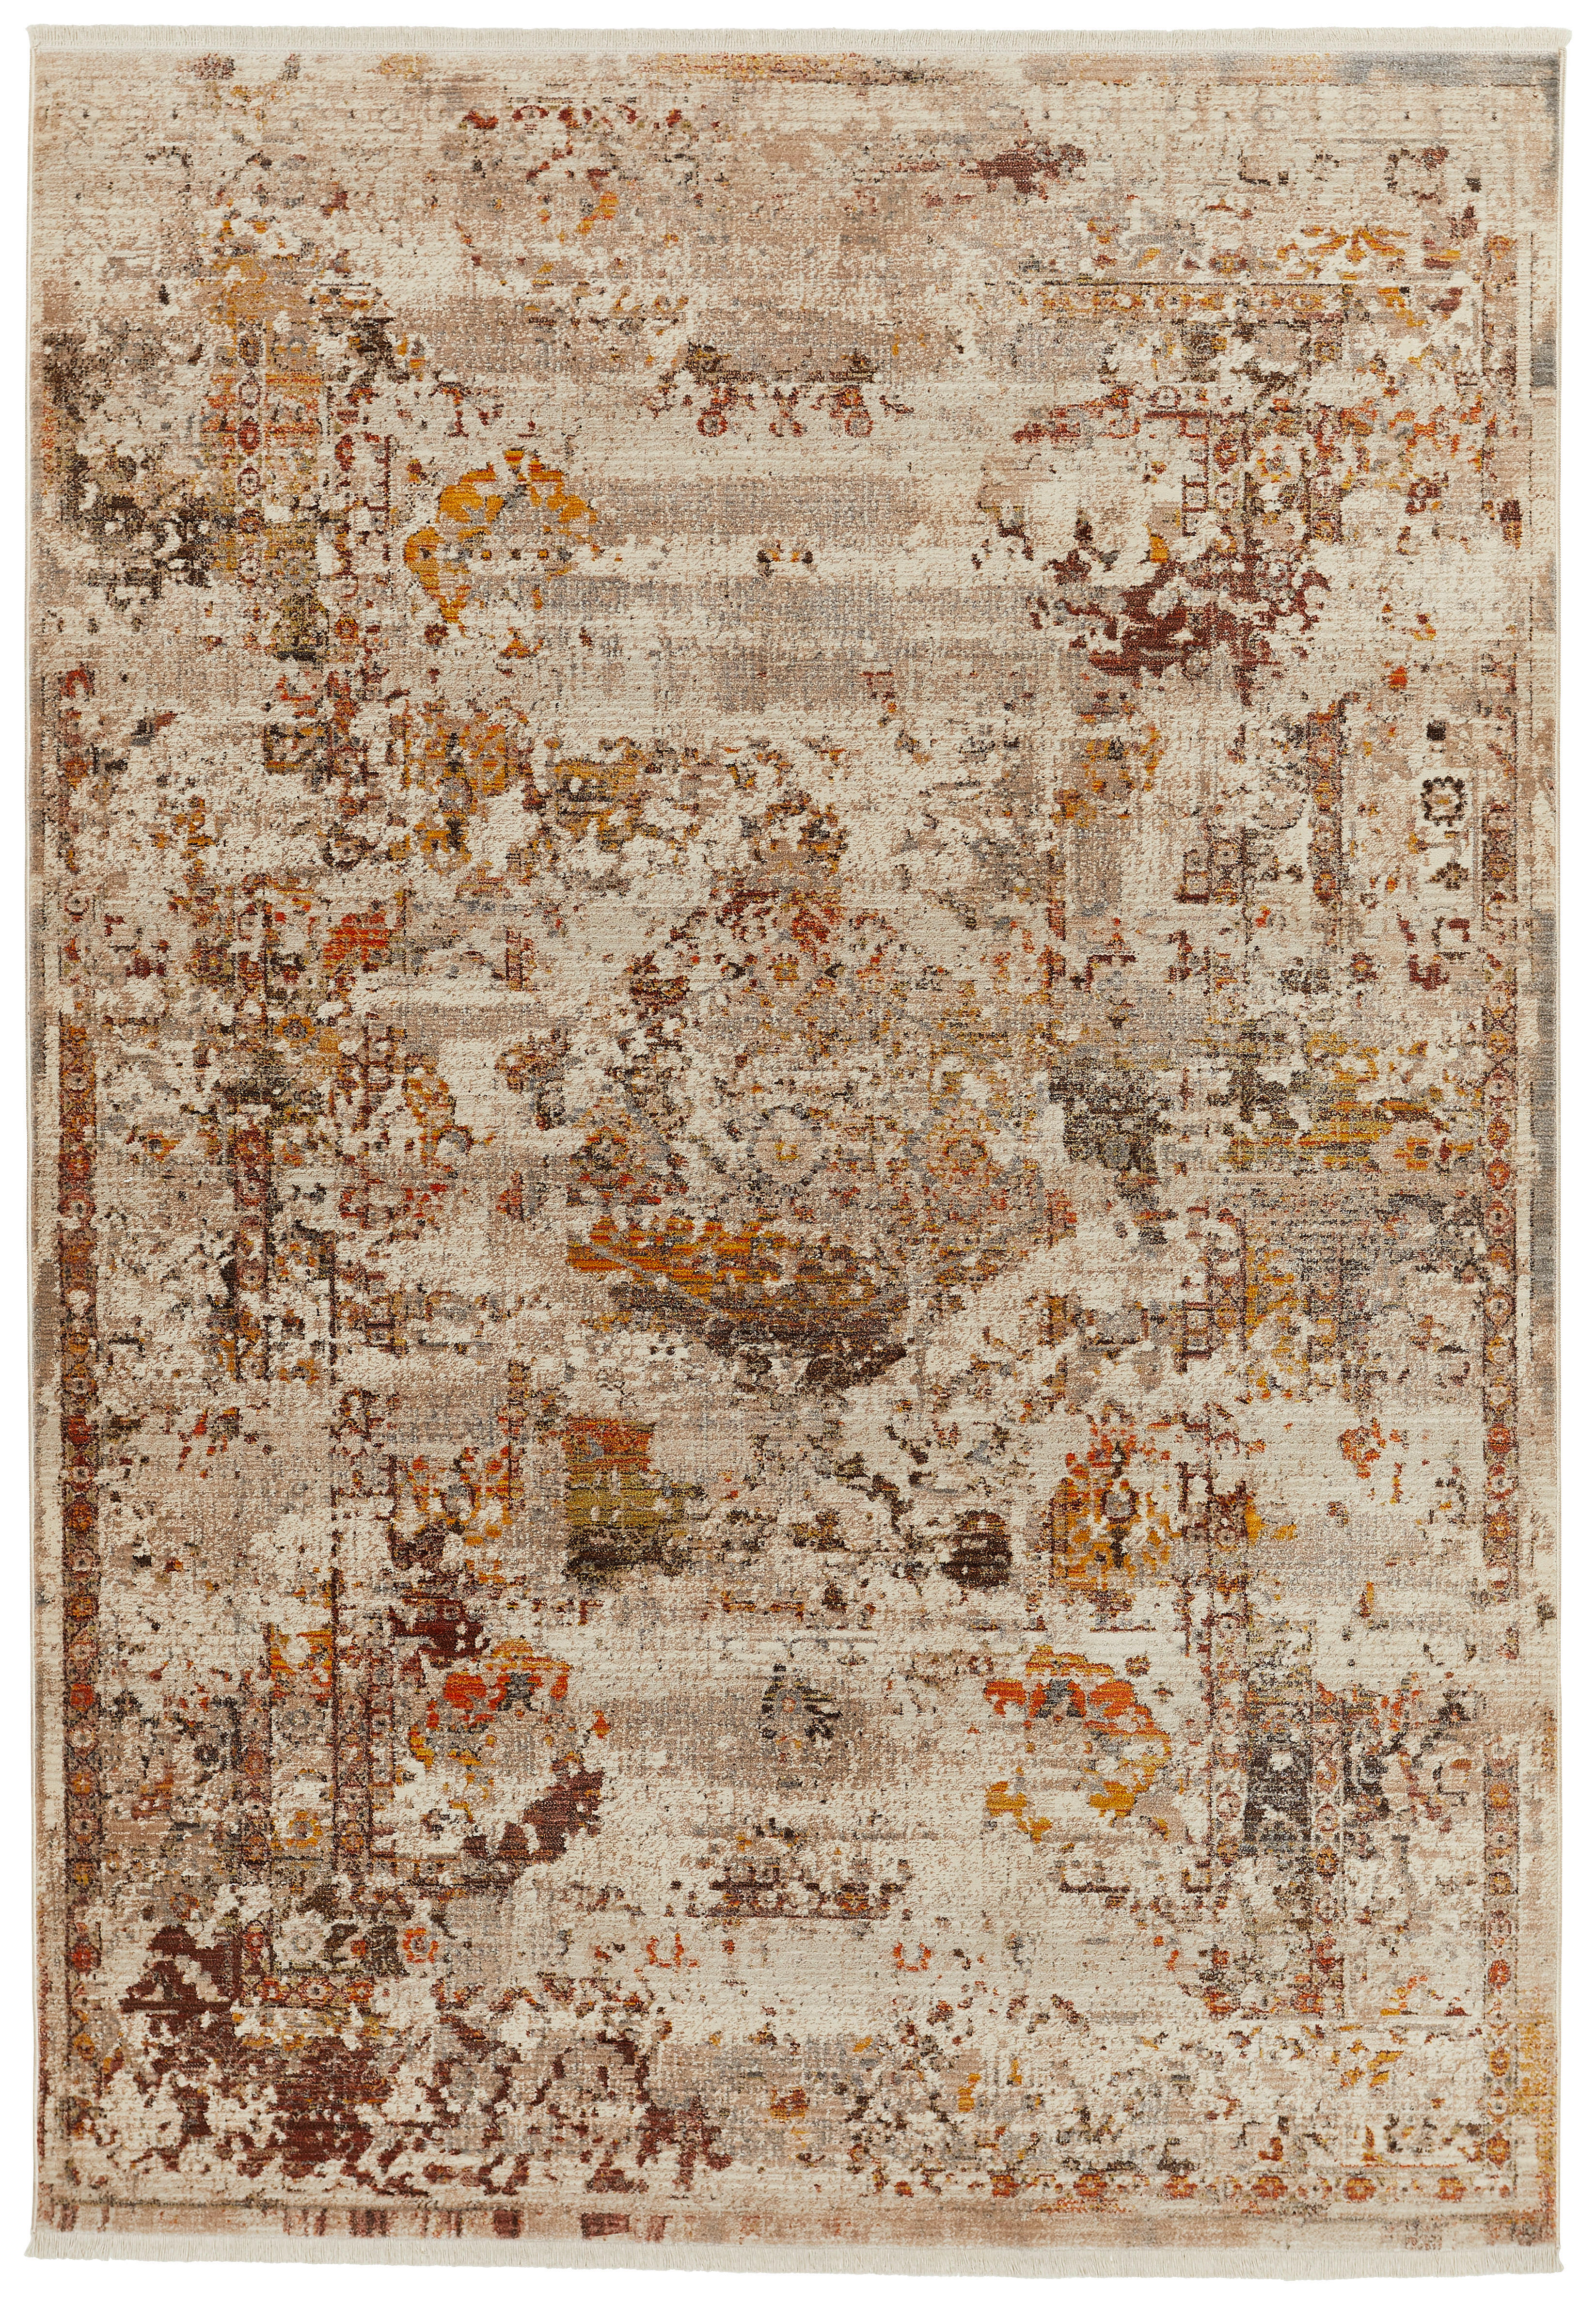 VINTAGE-TEPPICH Samarkand  200/285 cm  Multicolor   - Multicolor, LIFESTYLE, Textil (200/285cm) - Novel